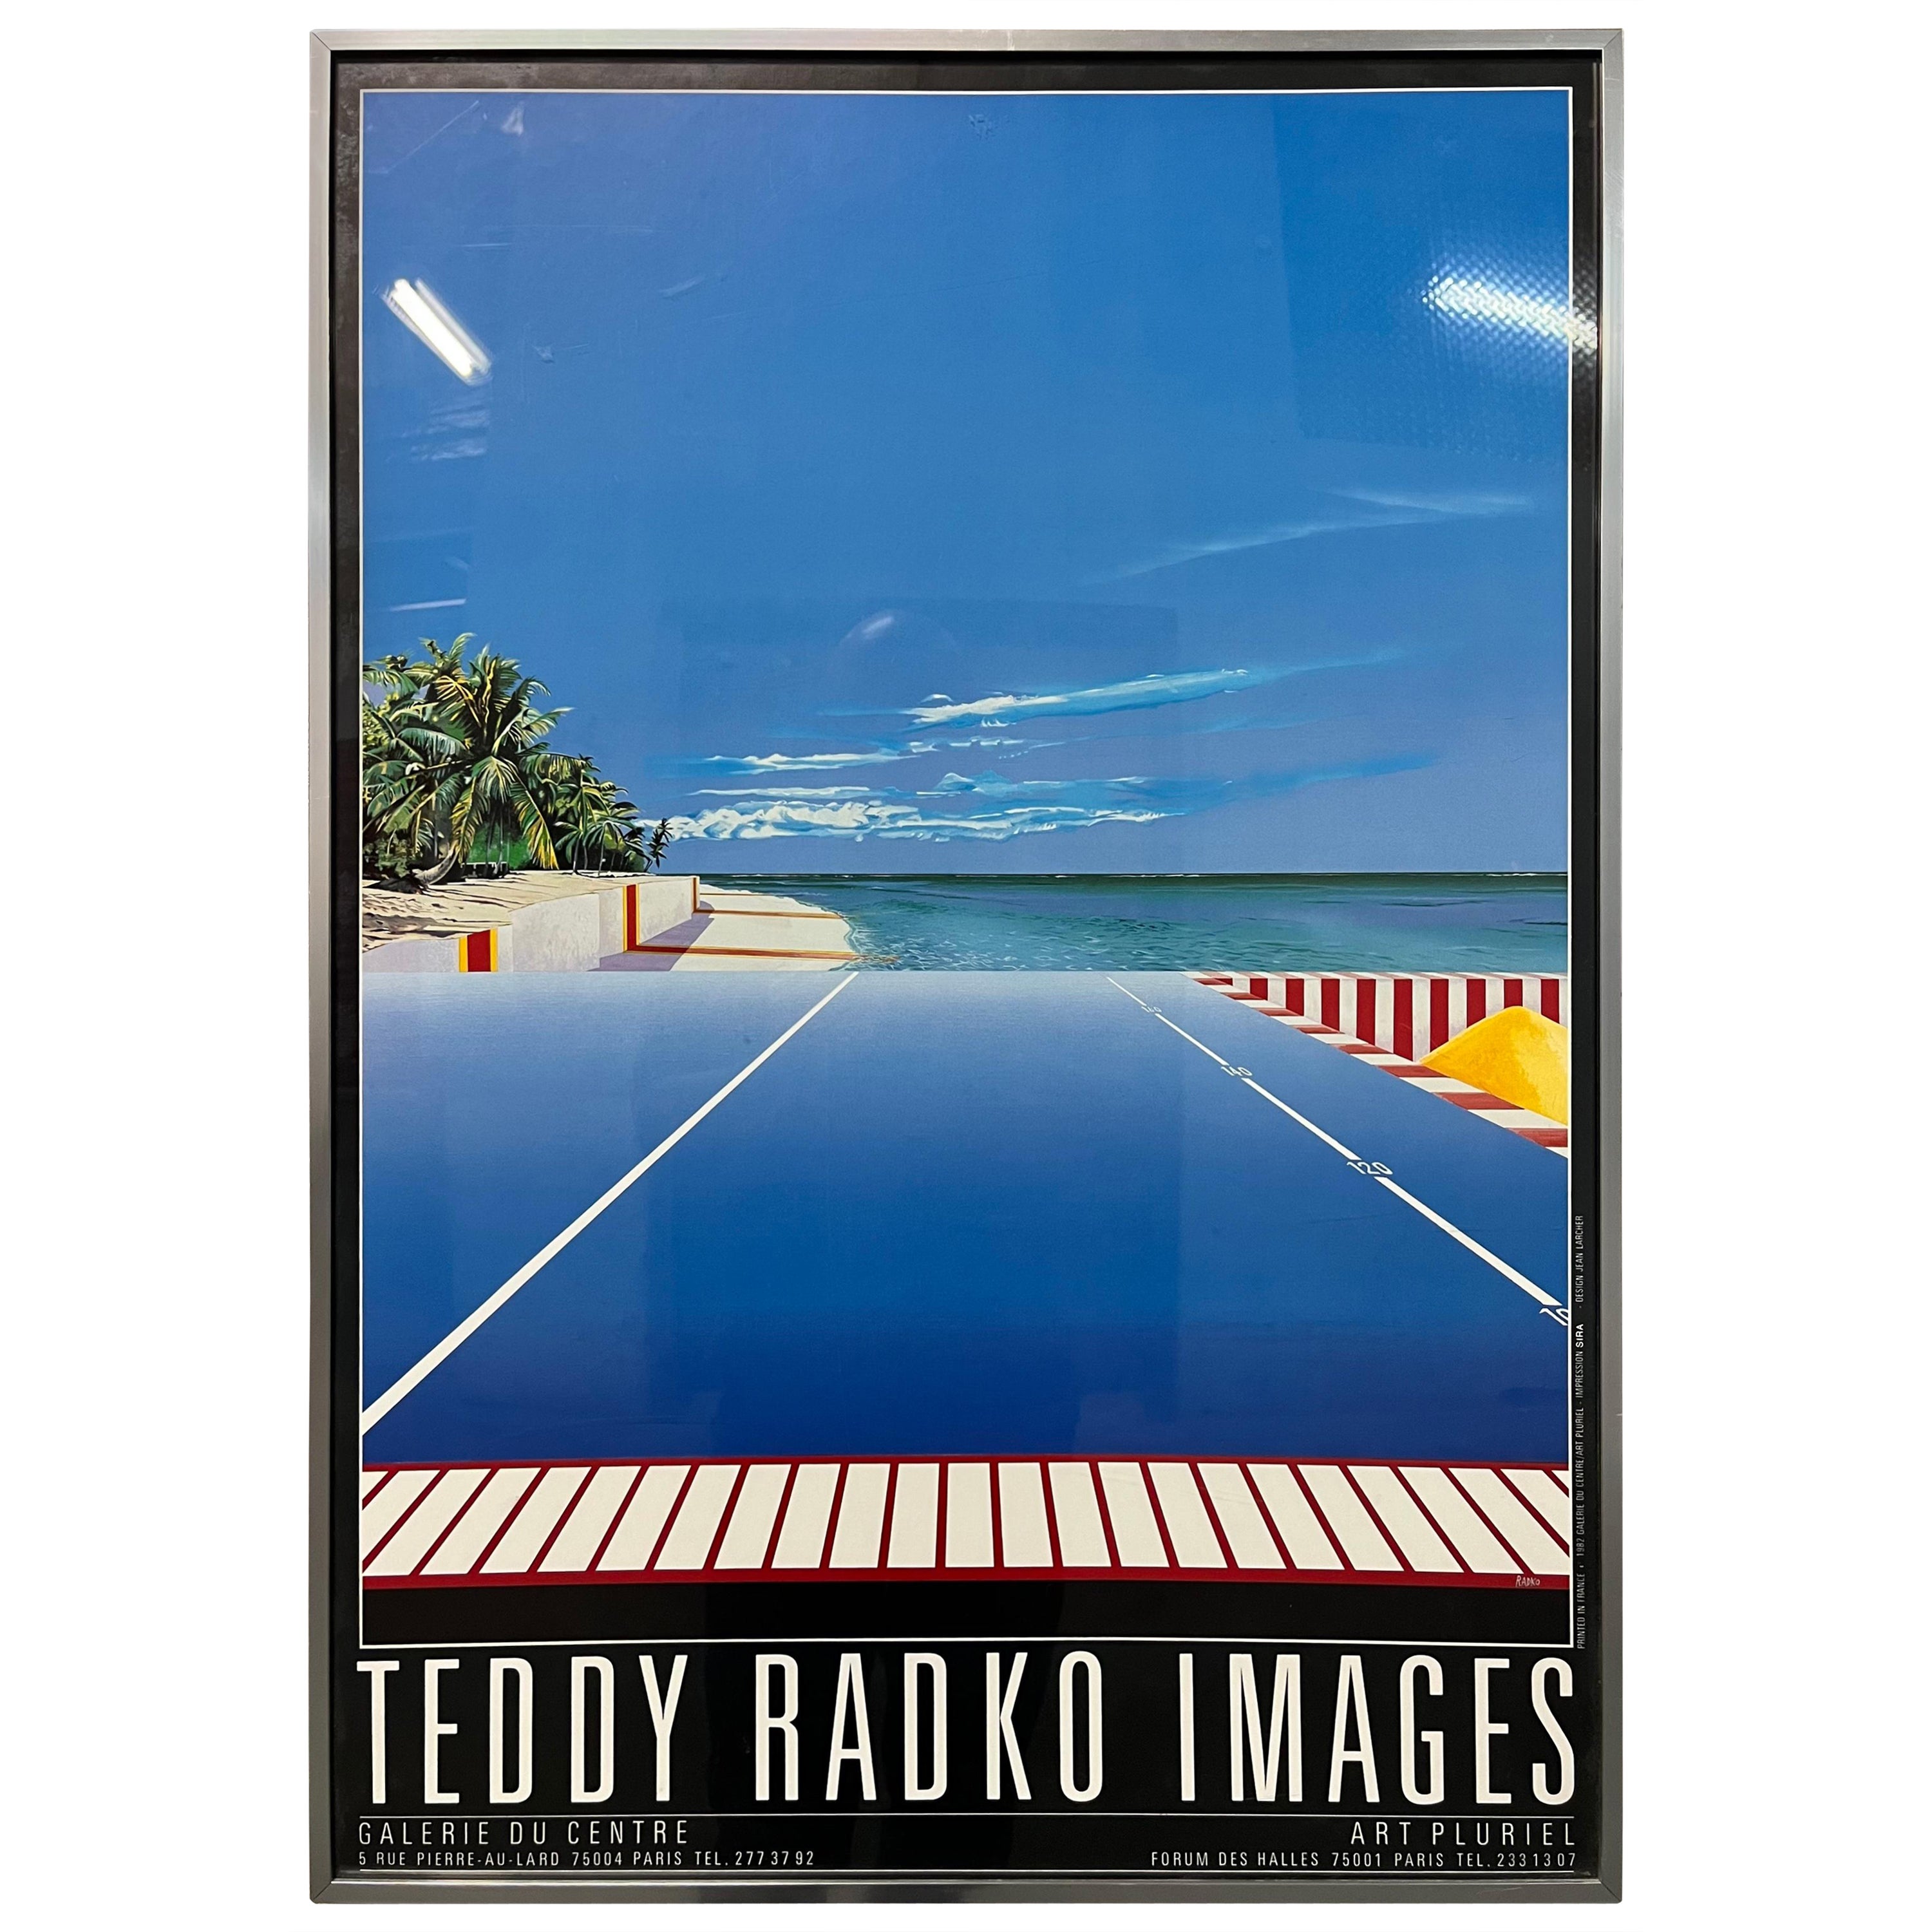 1980s Teddy Radko Images Exhibition Original Framed Poster. For Sale